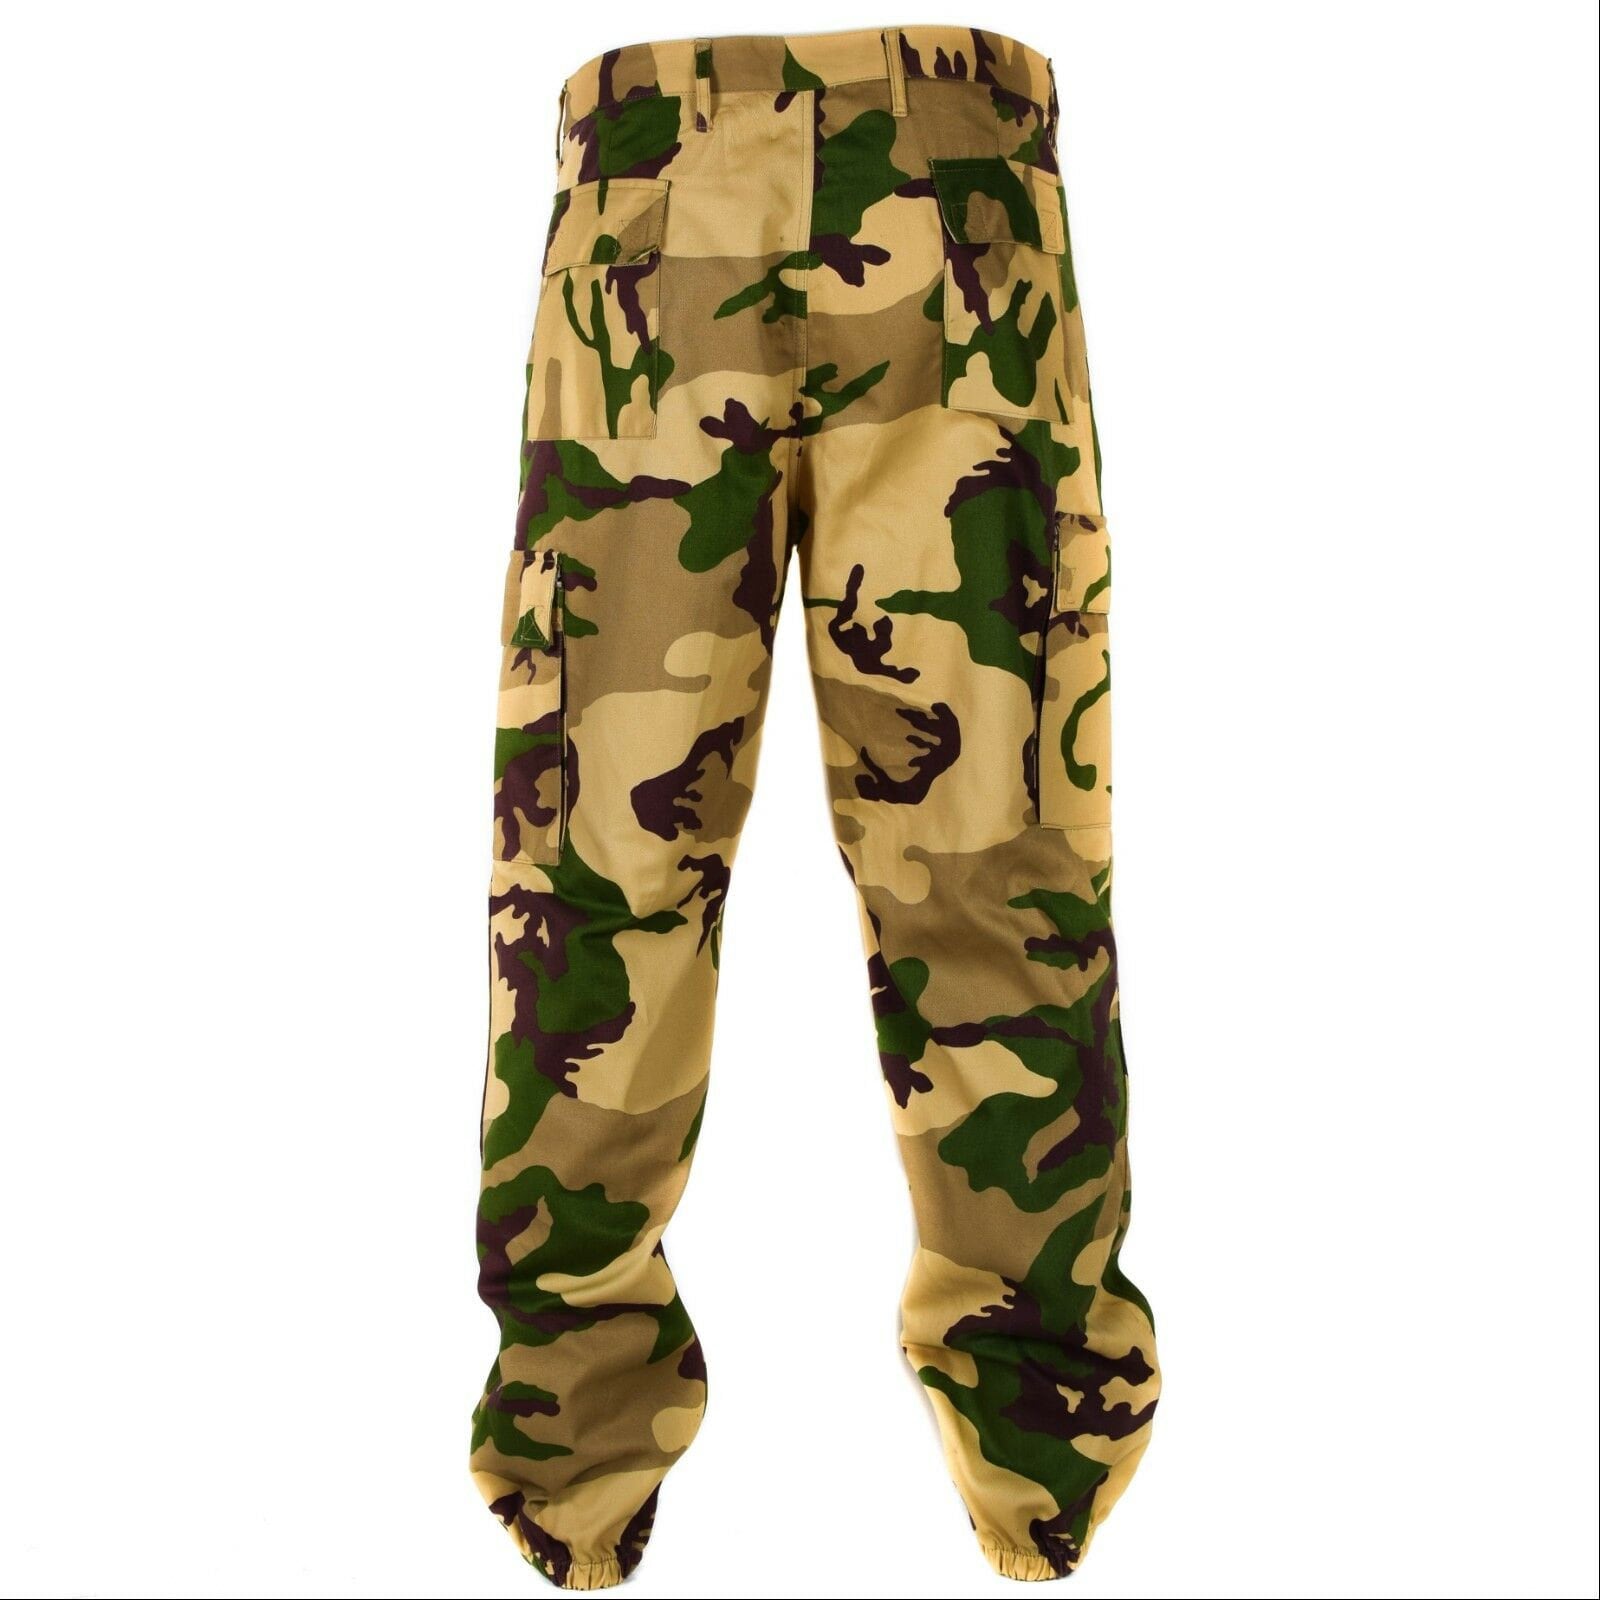 Original Italian army pants combat Desert tropic Camouflage field ...